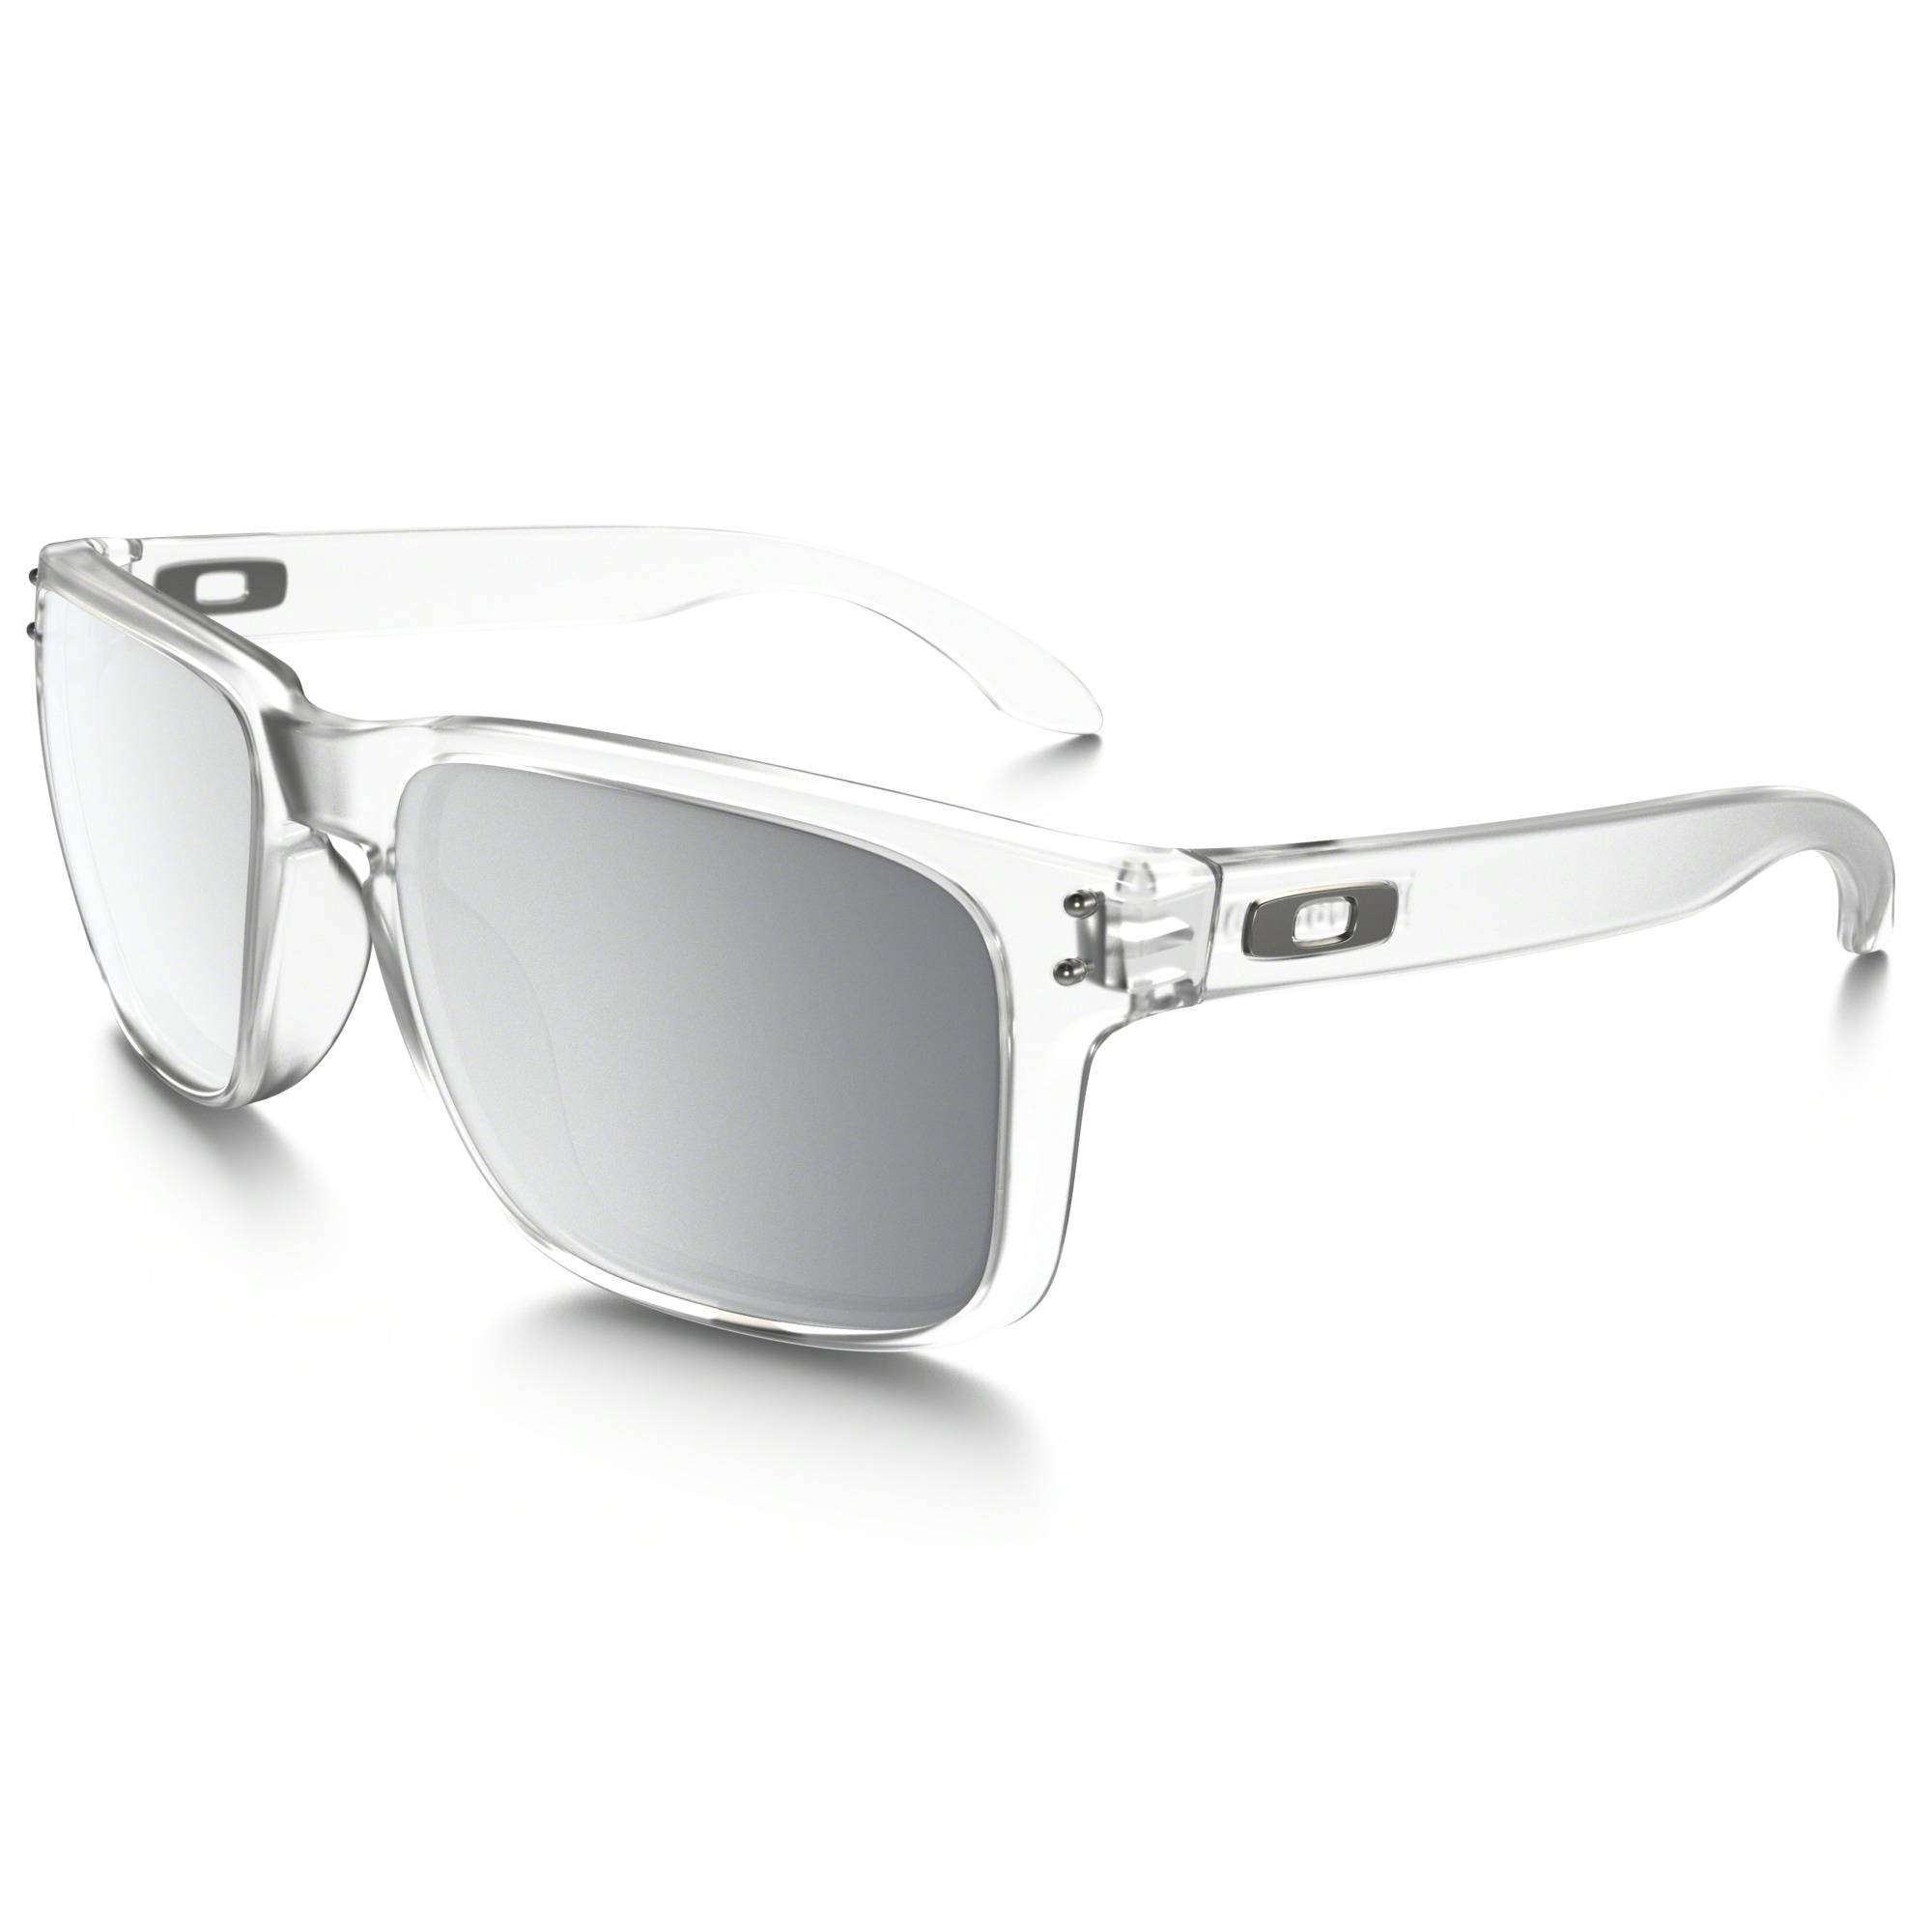 oakley holbrook clear frame sunglasses